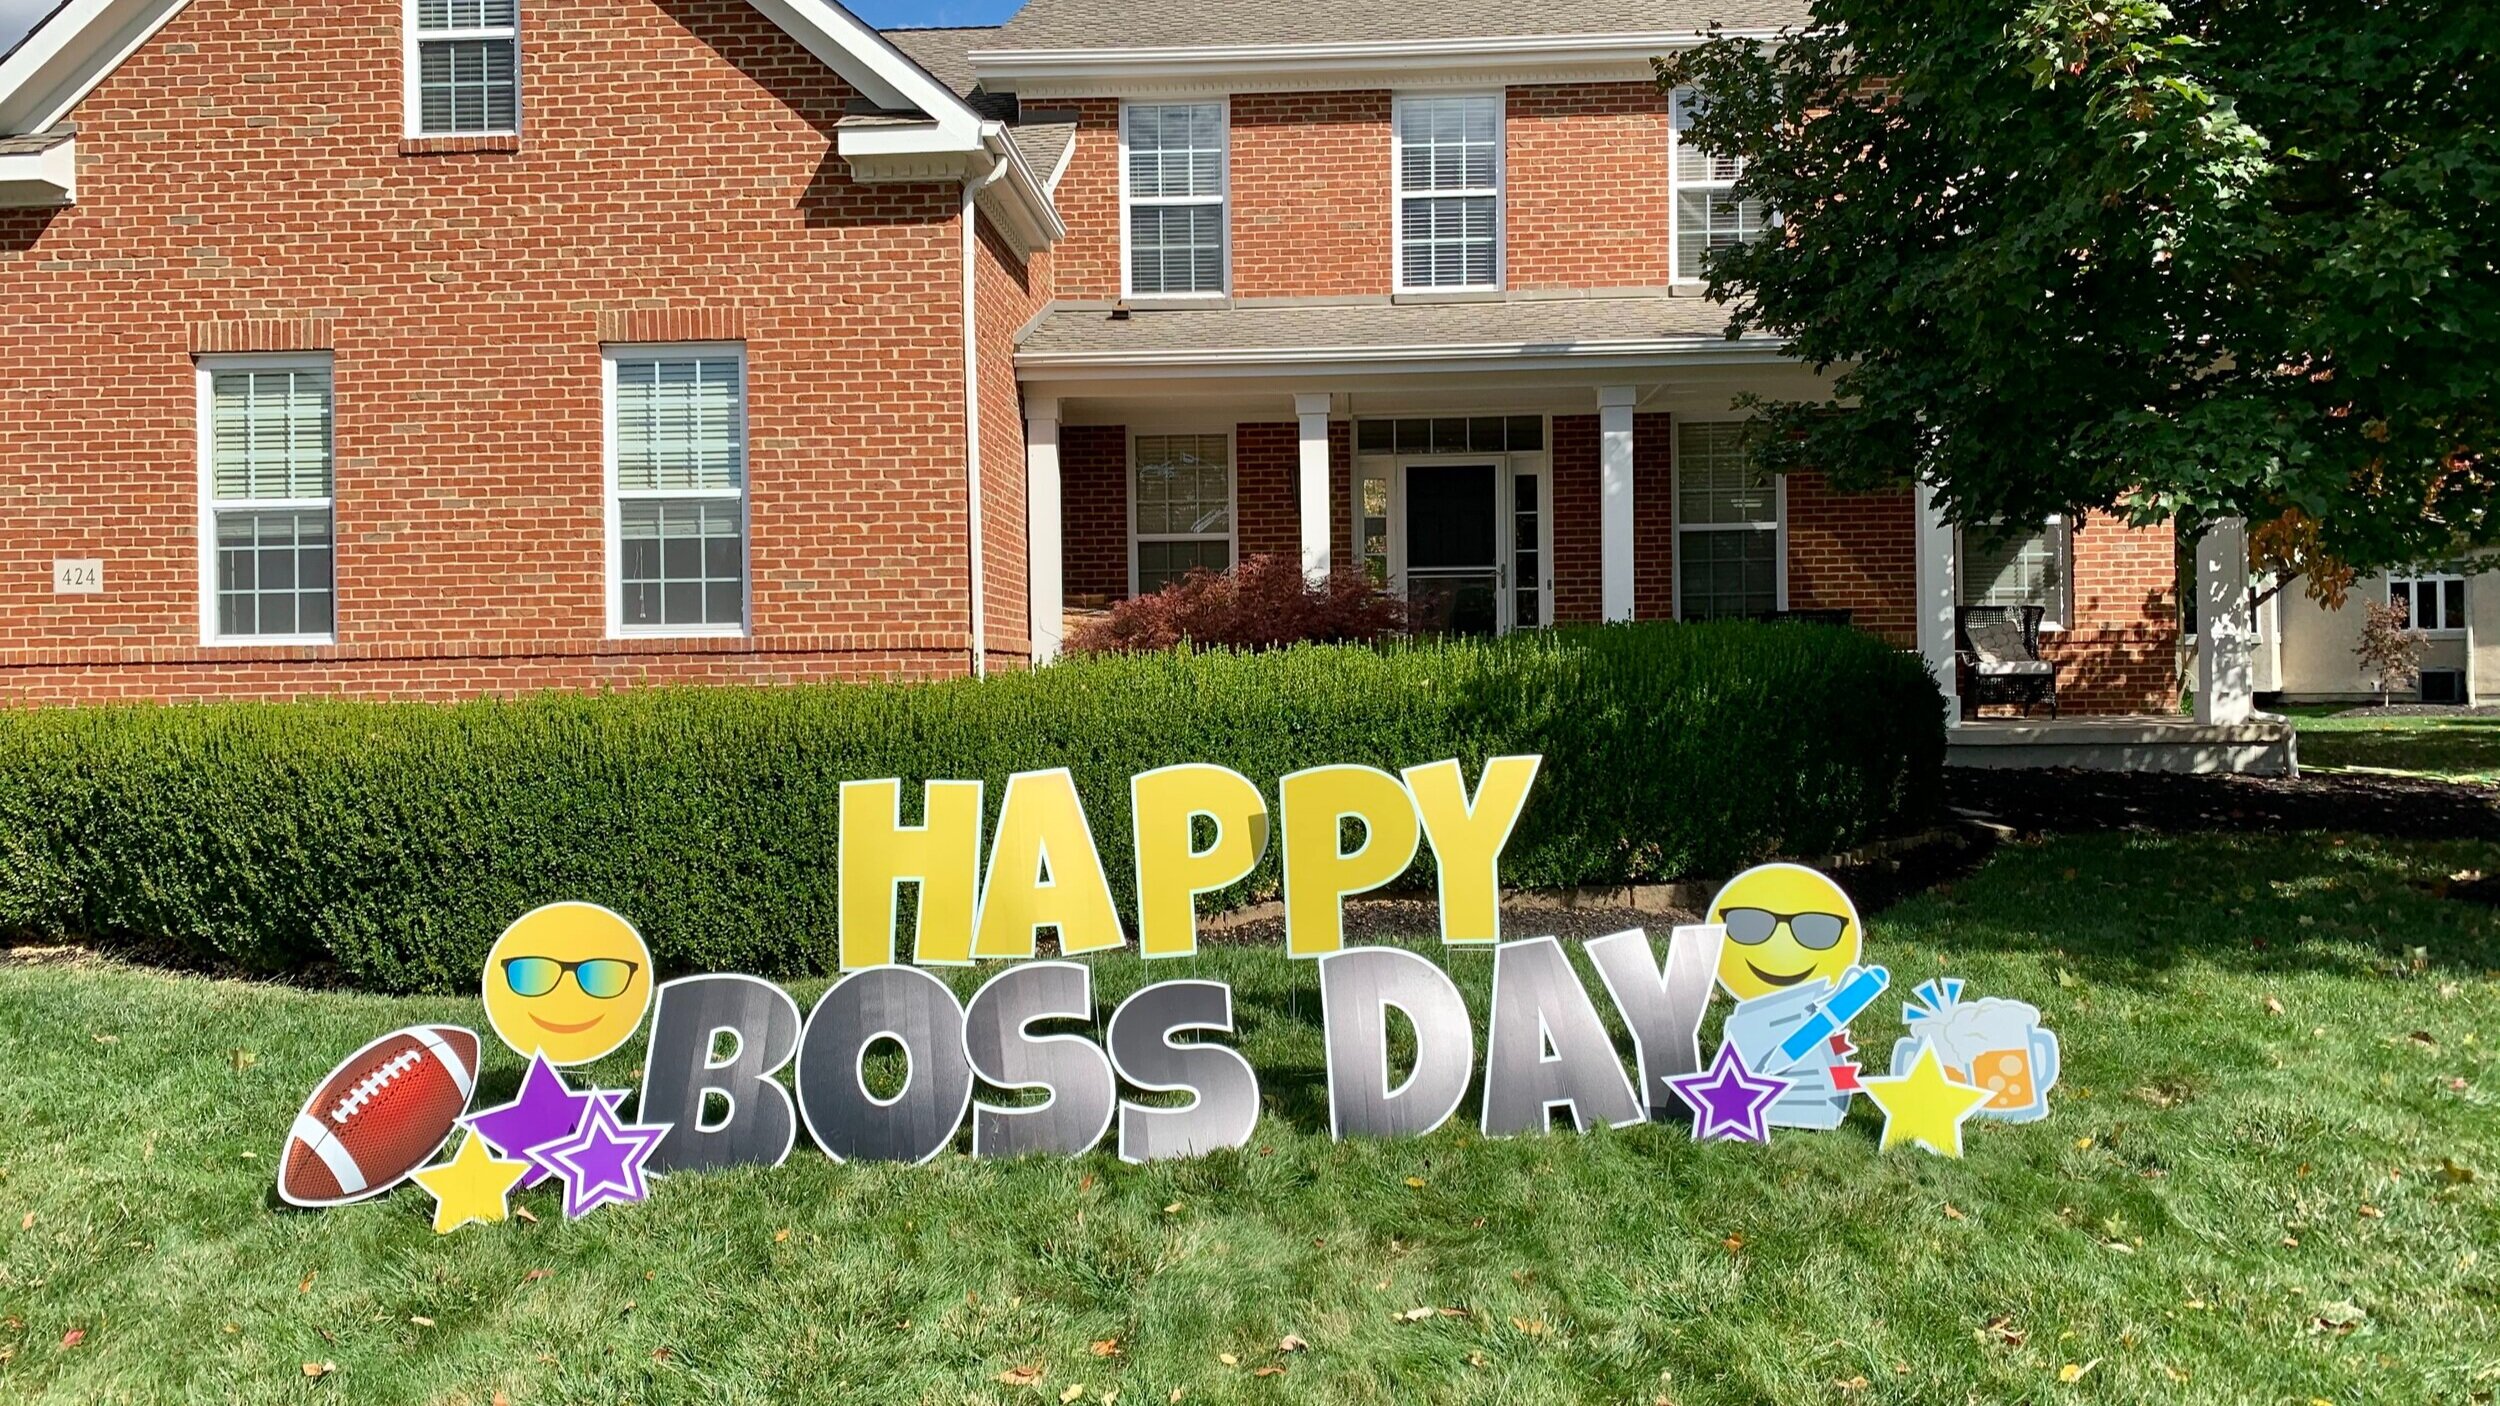 Happy Boss Day Yard Sign